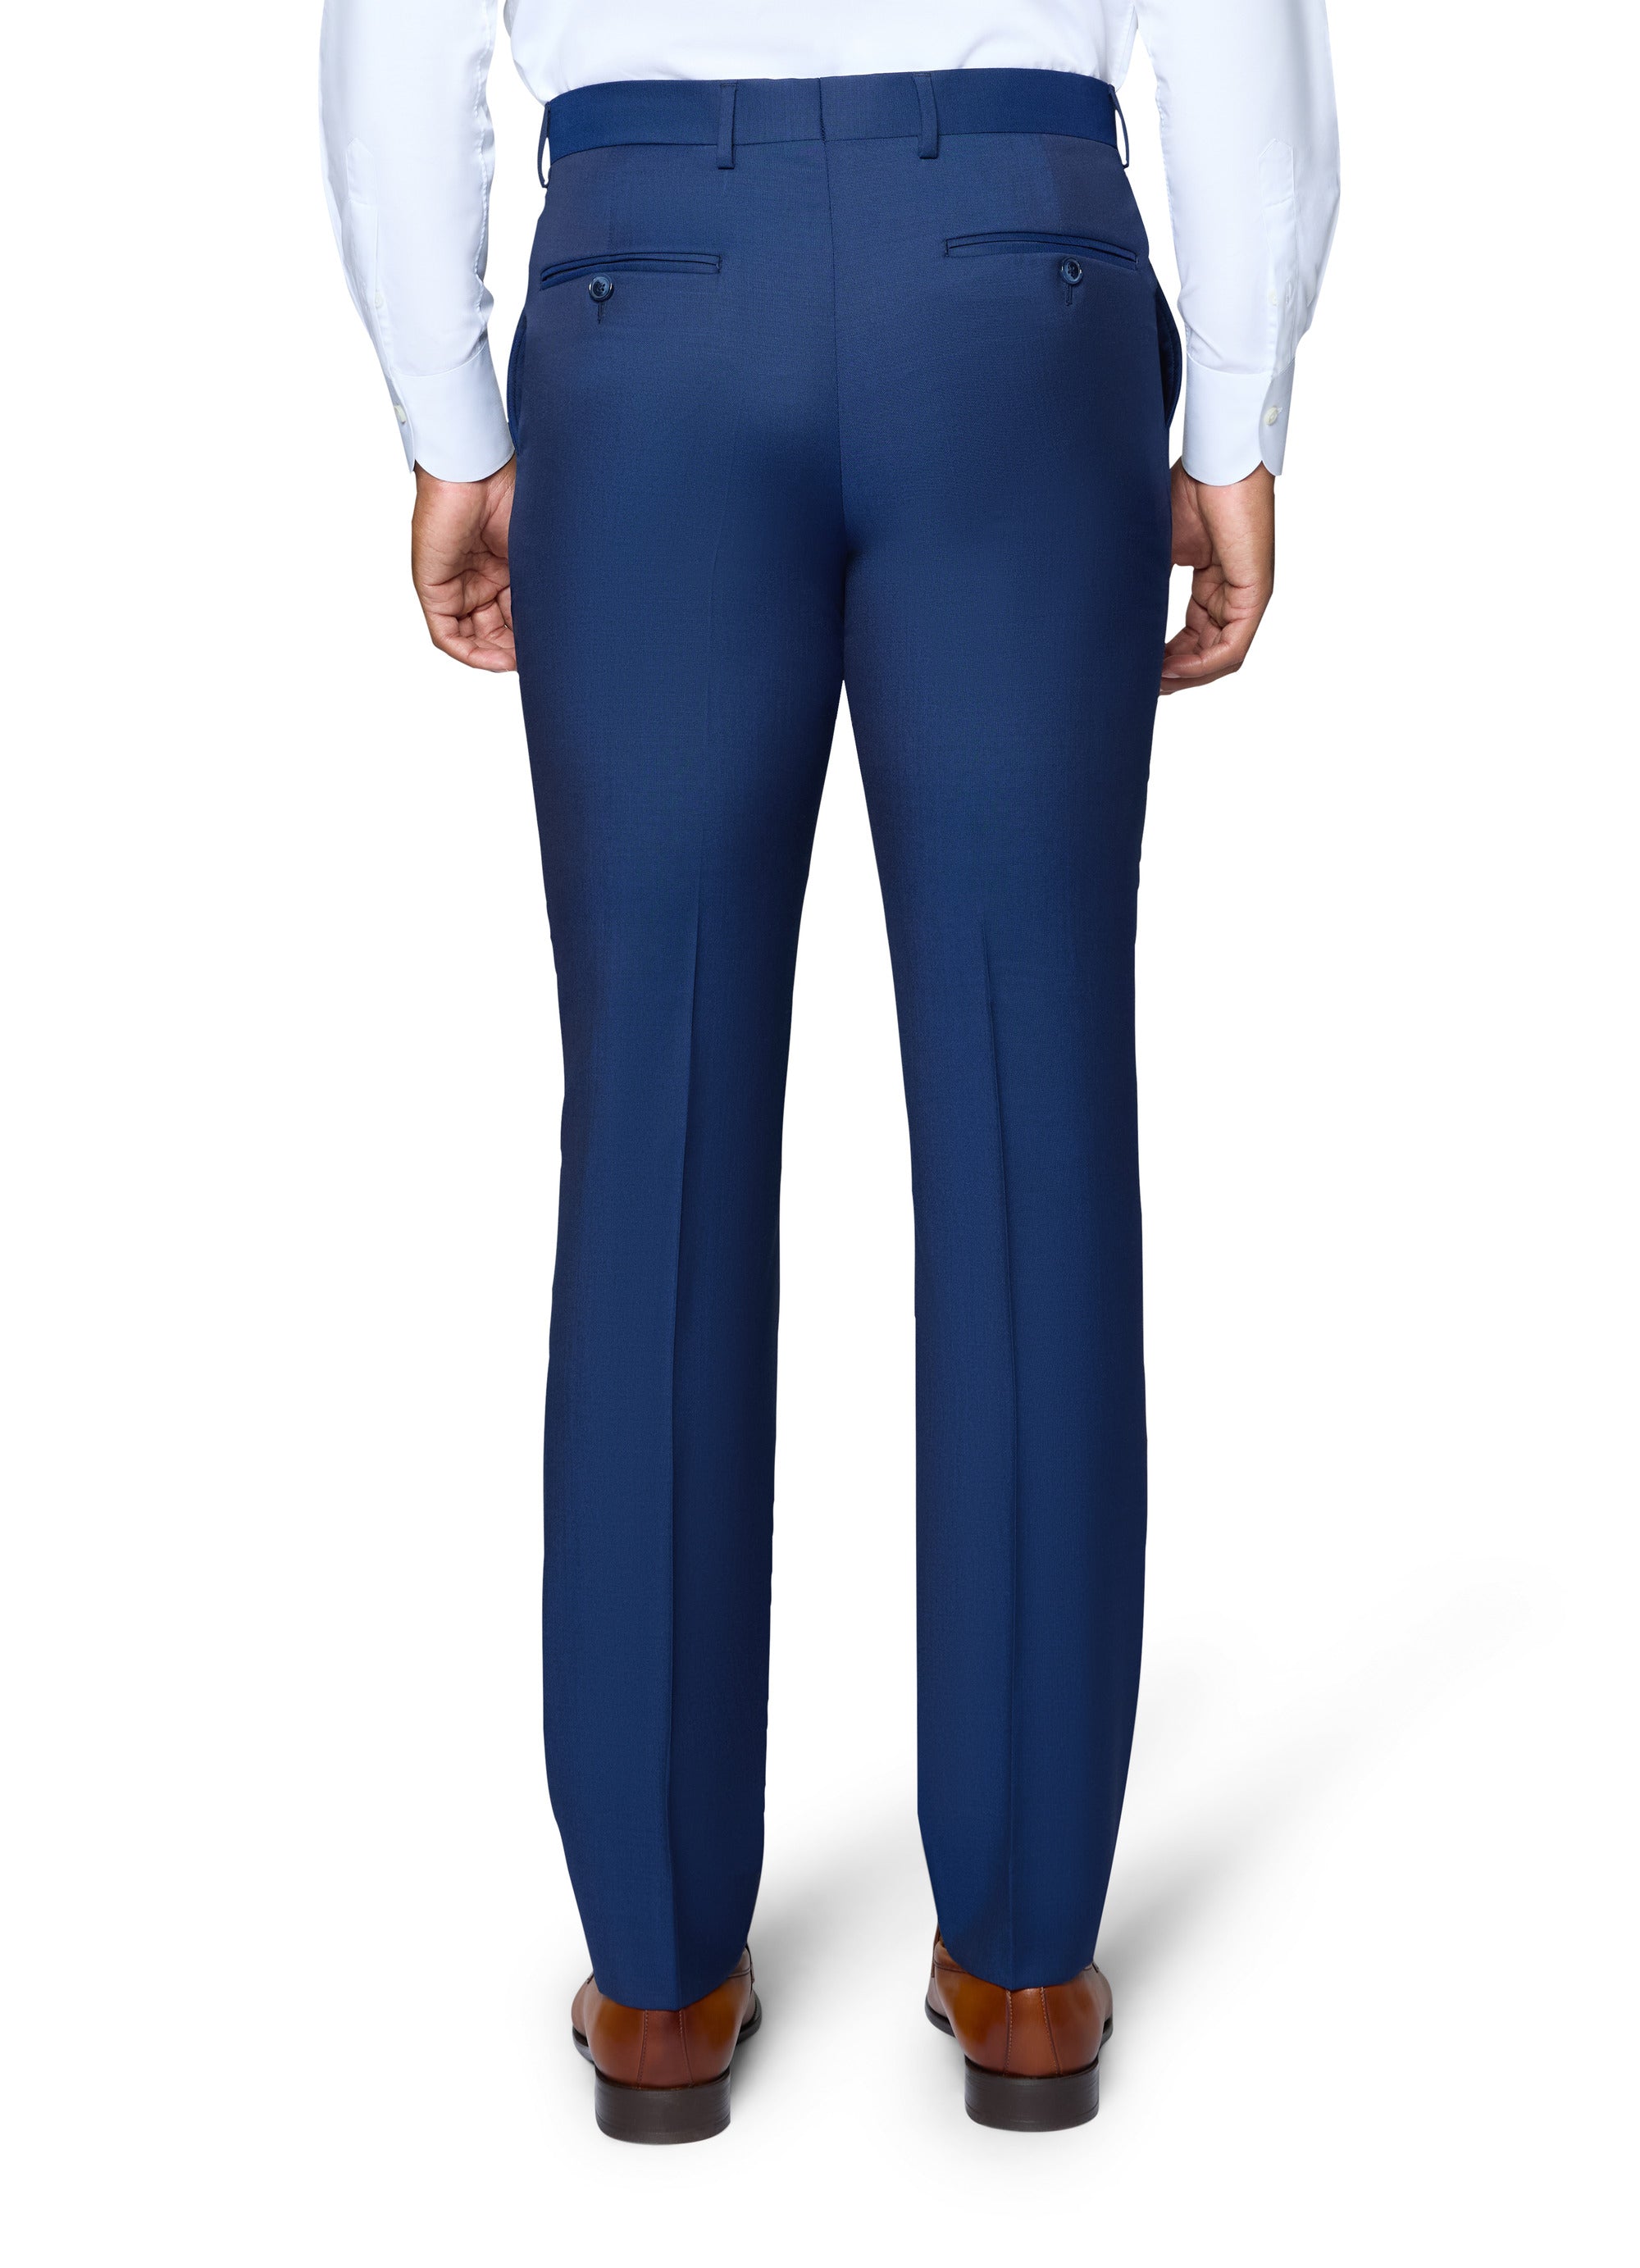 Berragamo - Reda | Modern 2-Piece Notch Solid New Blue Suit